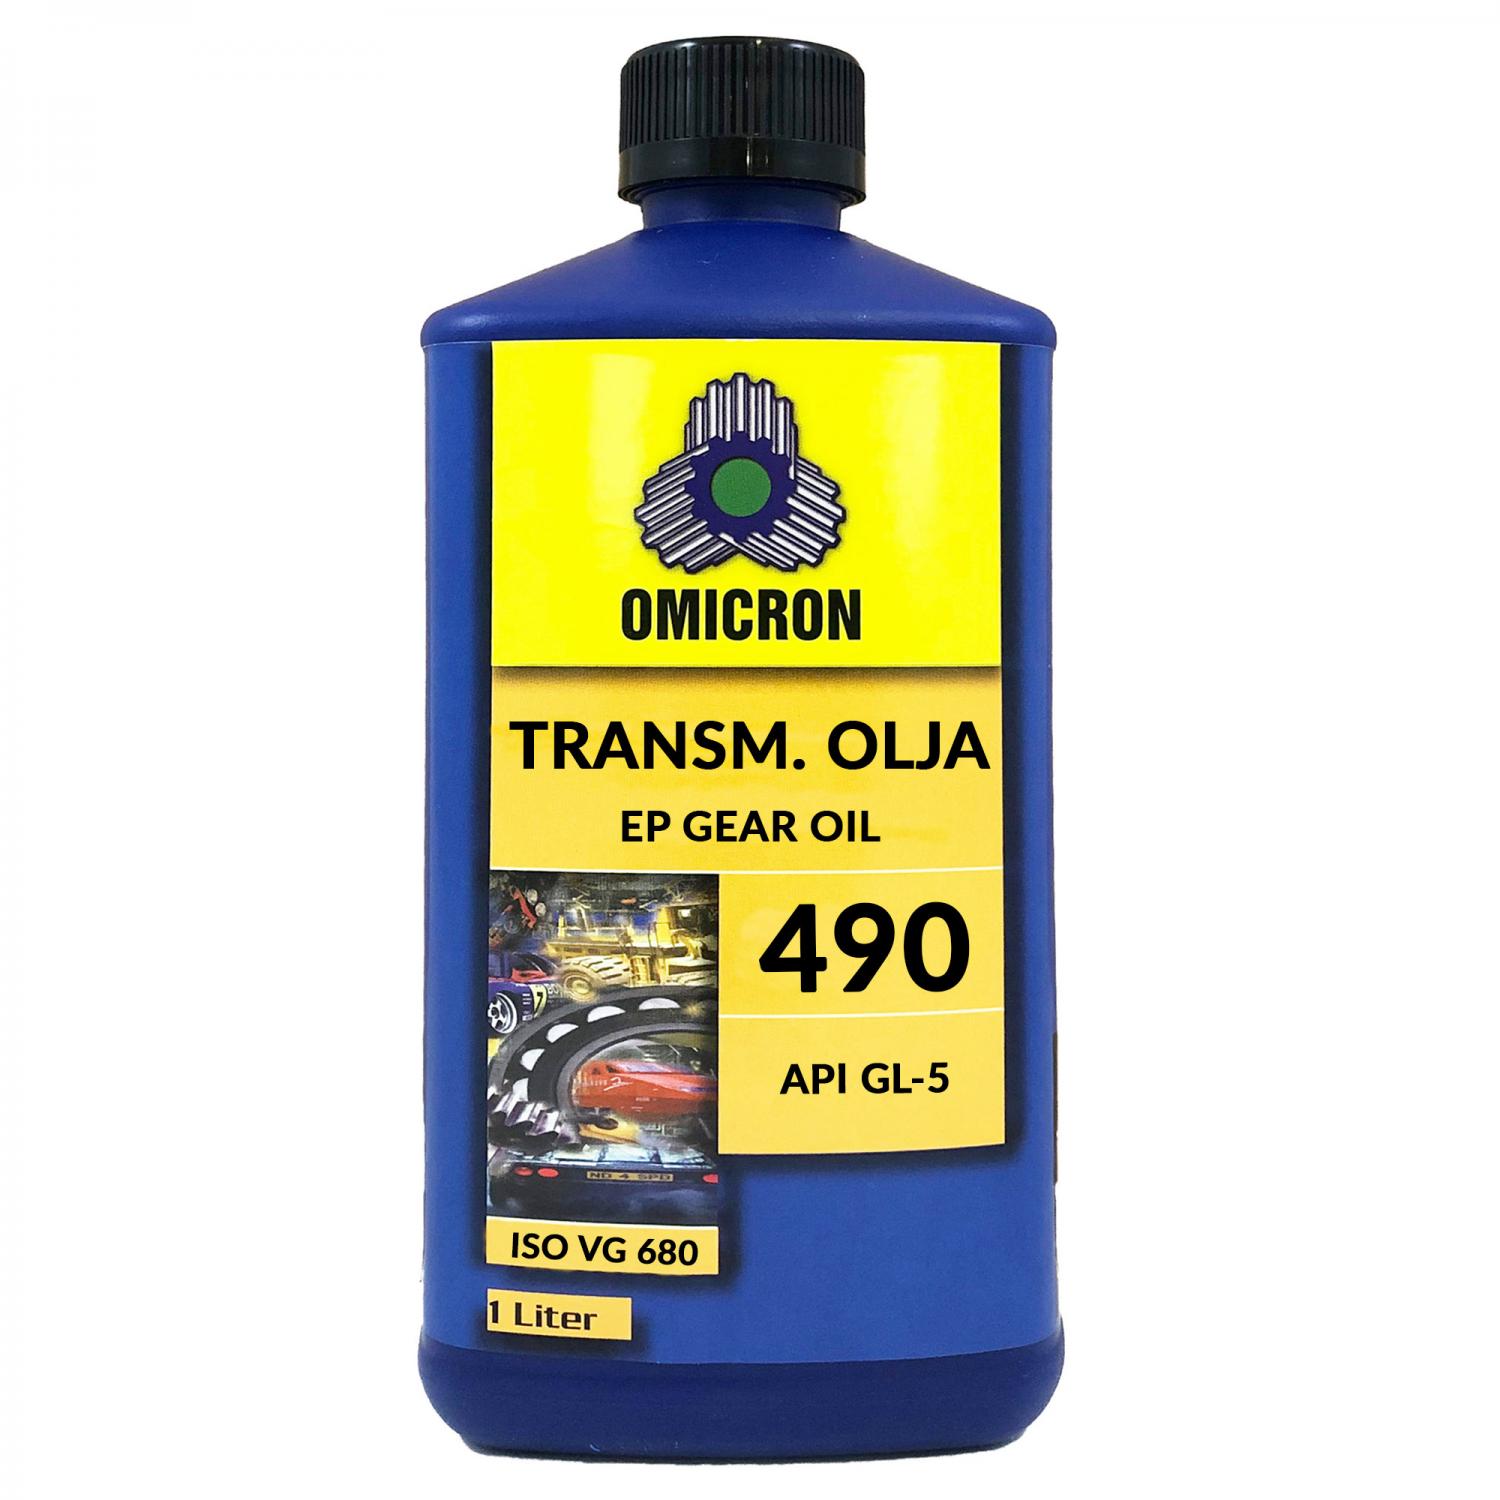 Omicron 490 ISO VG 680 Transmissionsolja API GL...